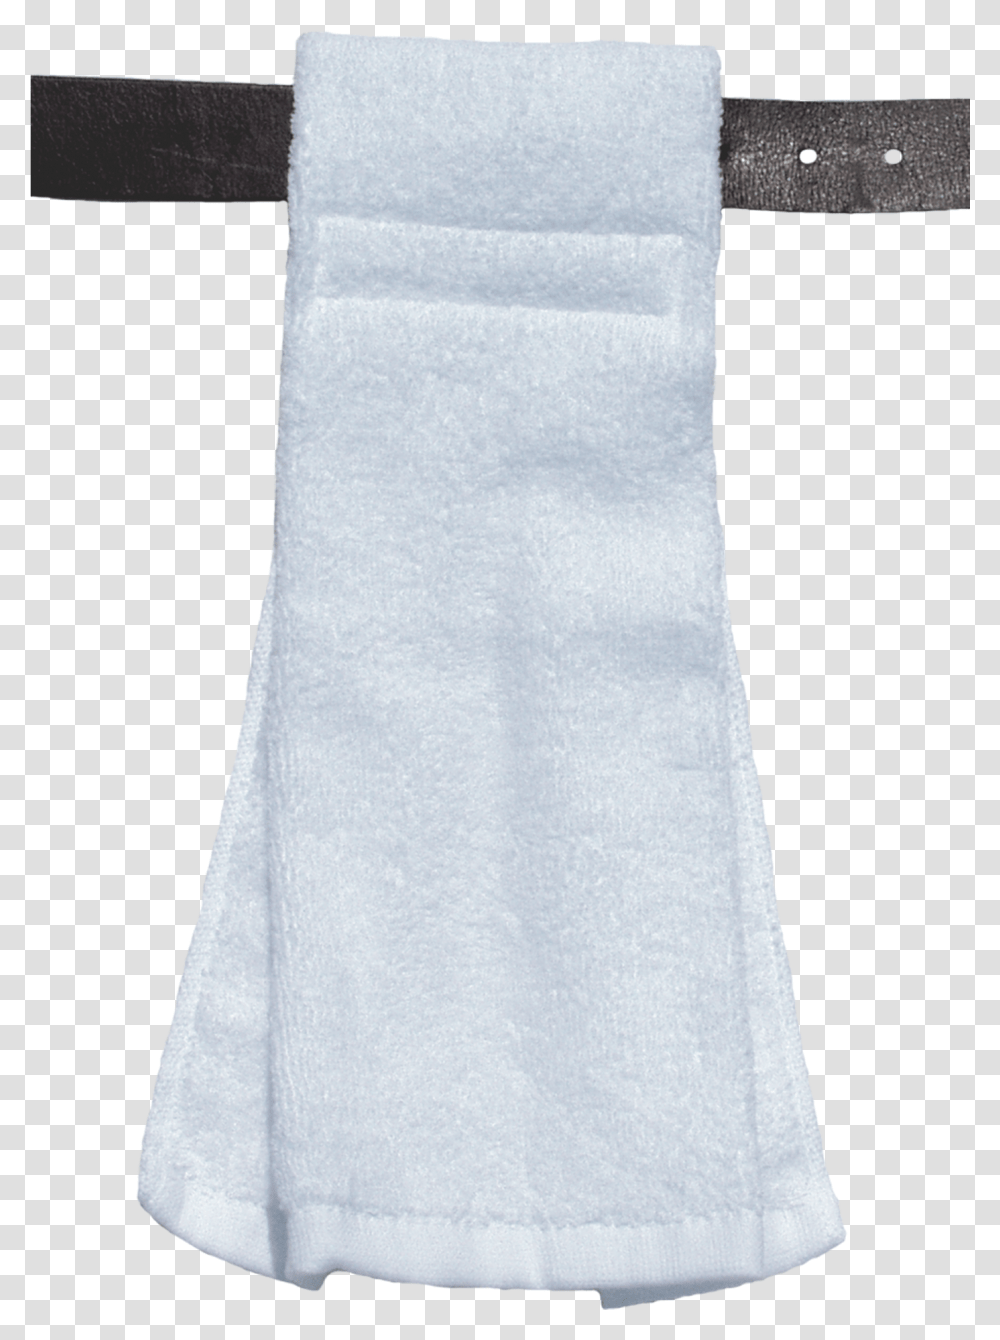 Fft 1 Football Towel, Apparel, Rug, Scarf Transparent Png